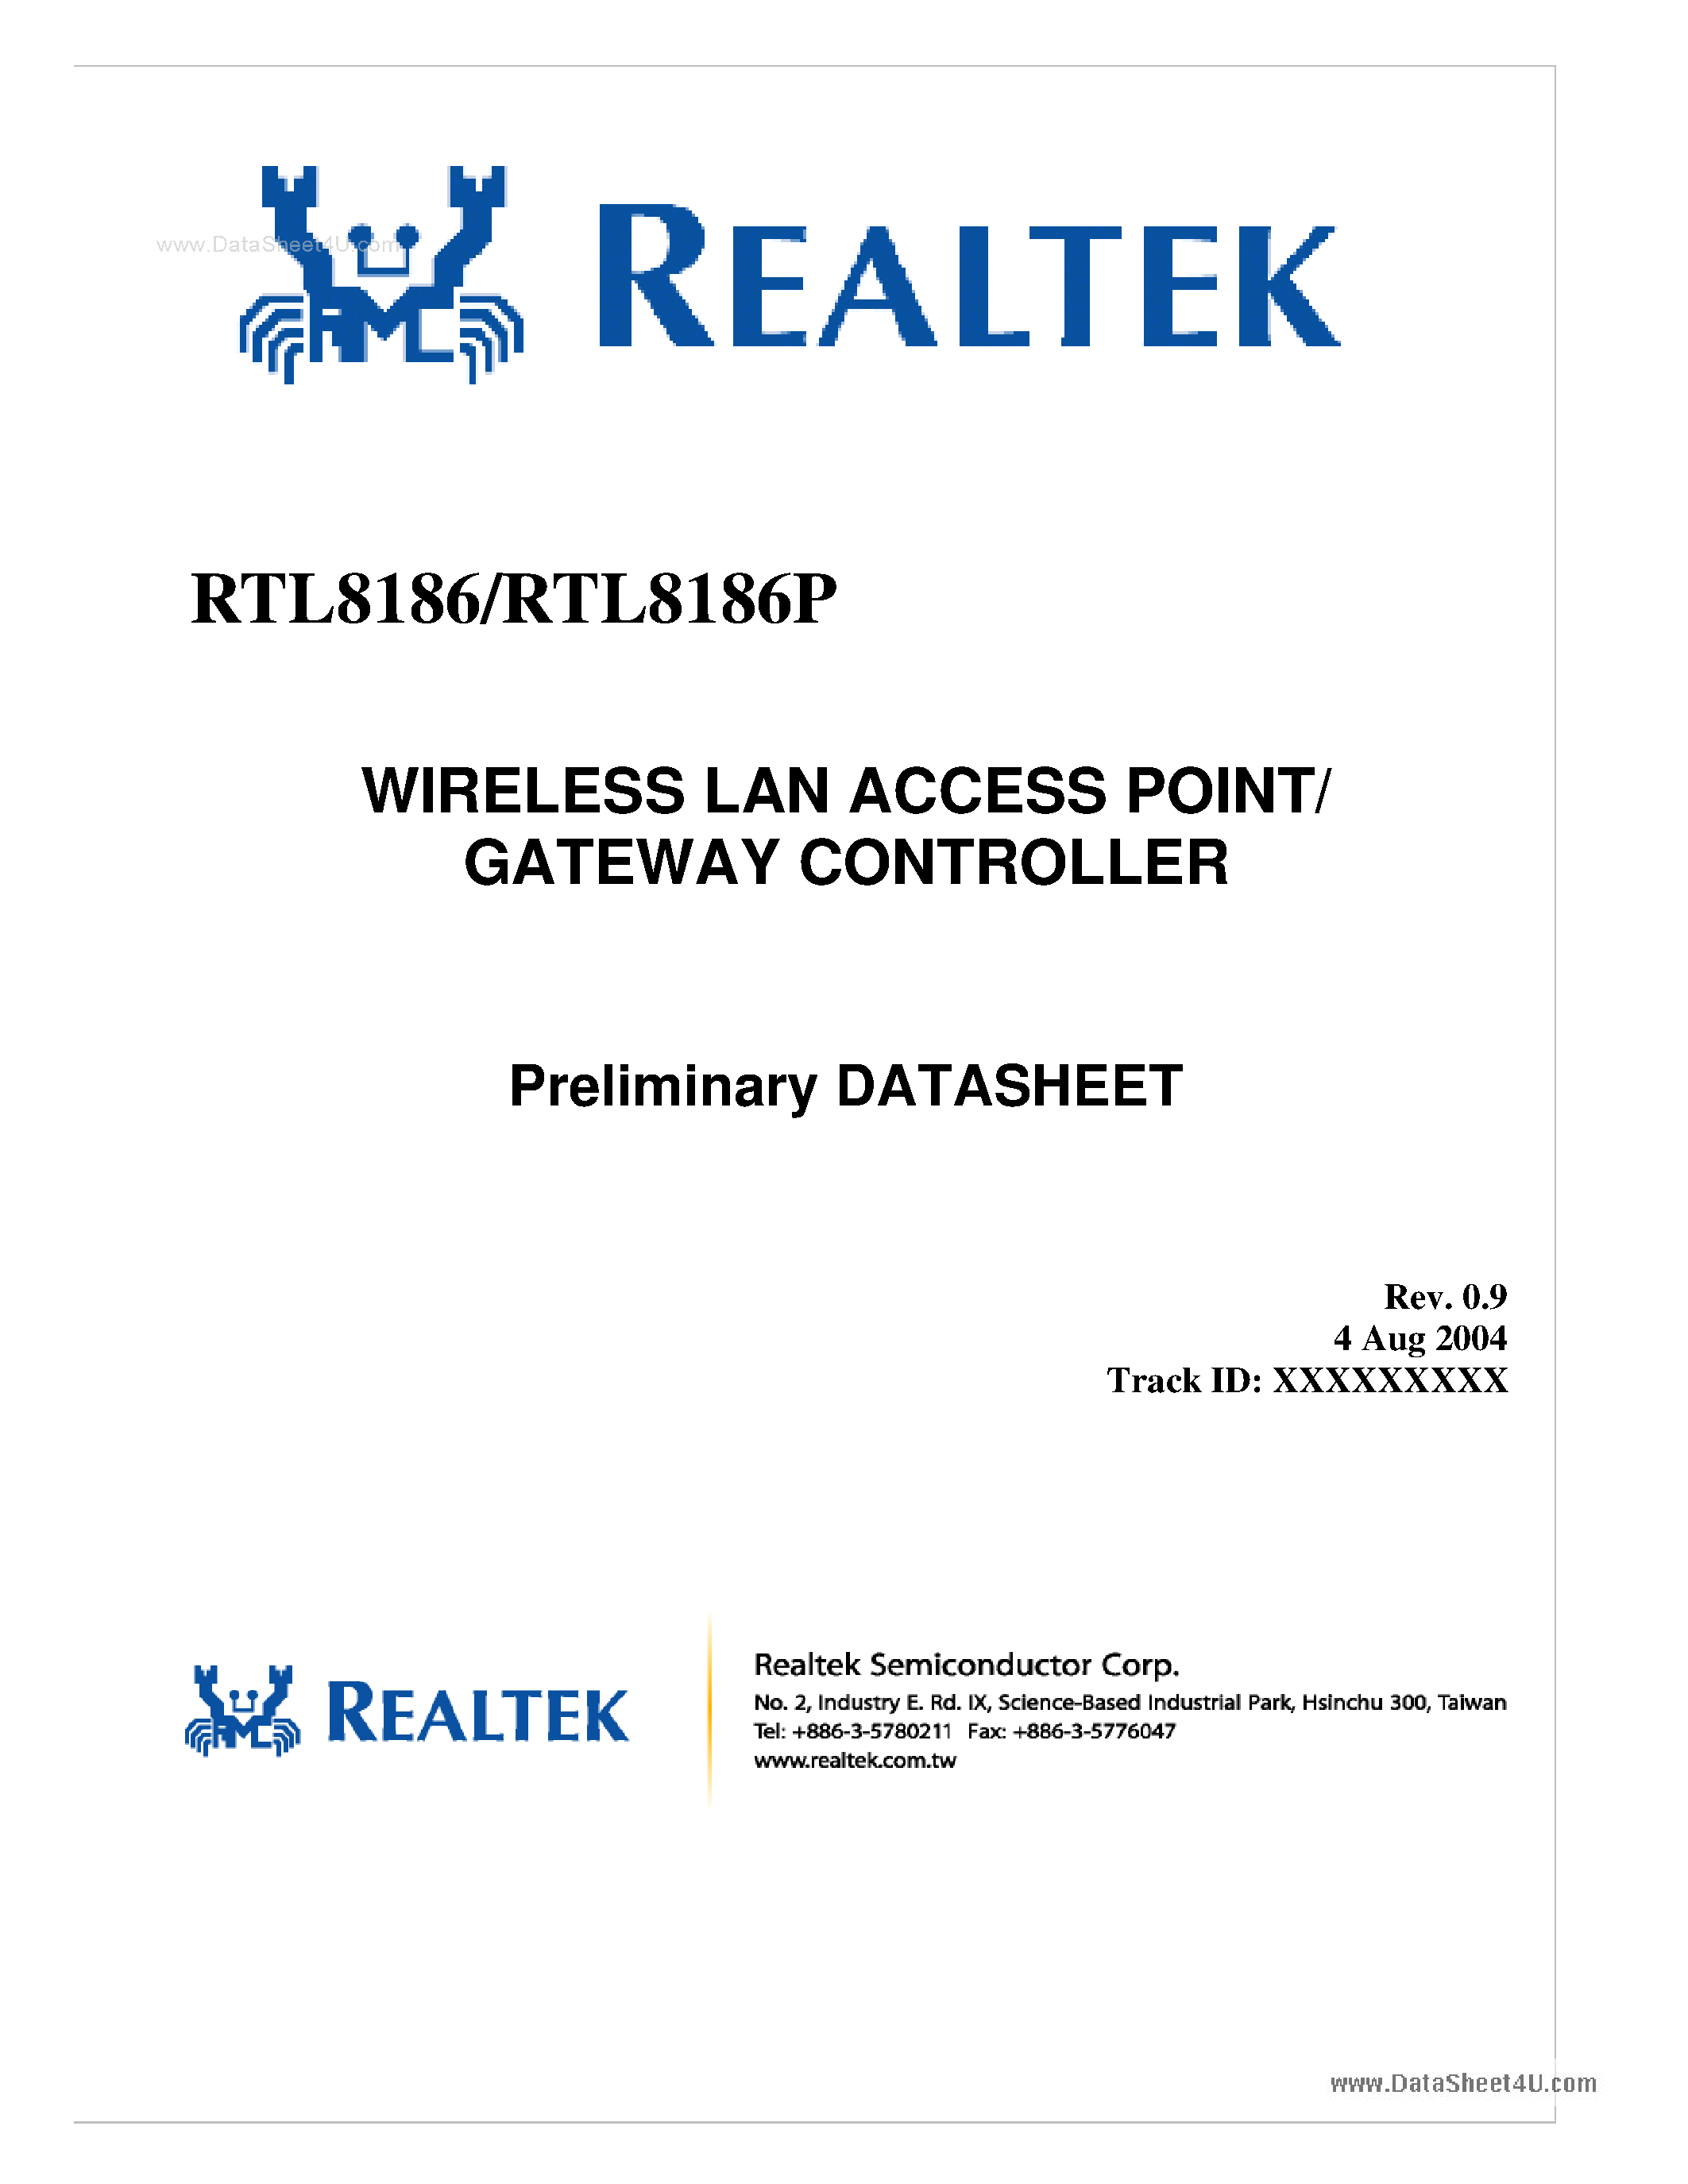 Даташит RTL8186-Wireless LAN Access Point/Gateway Controller страница 1